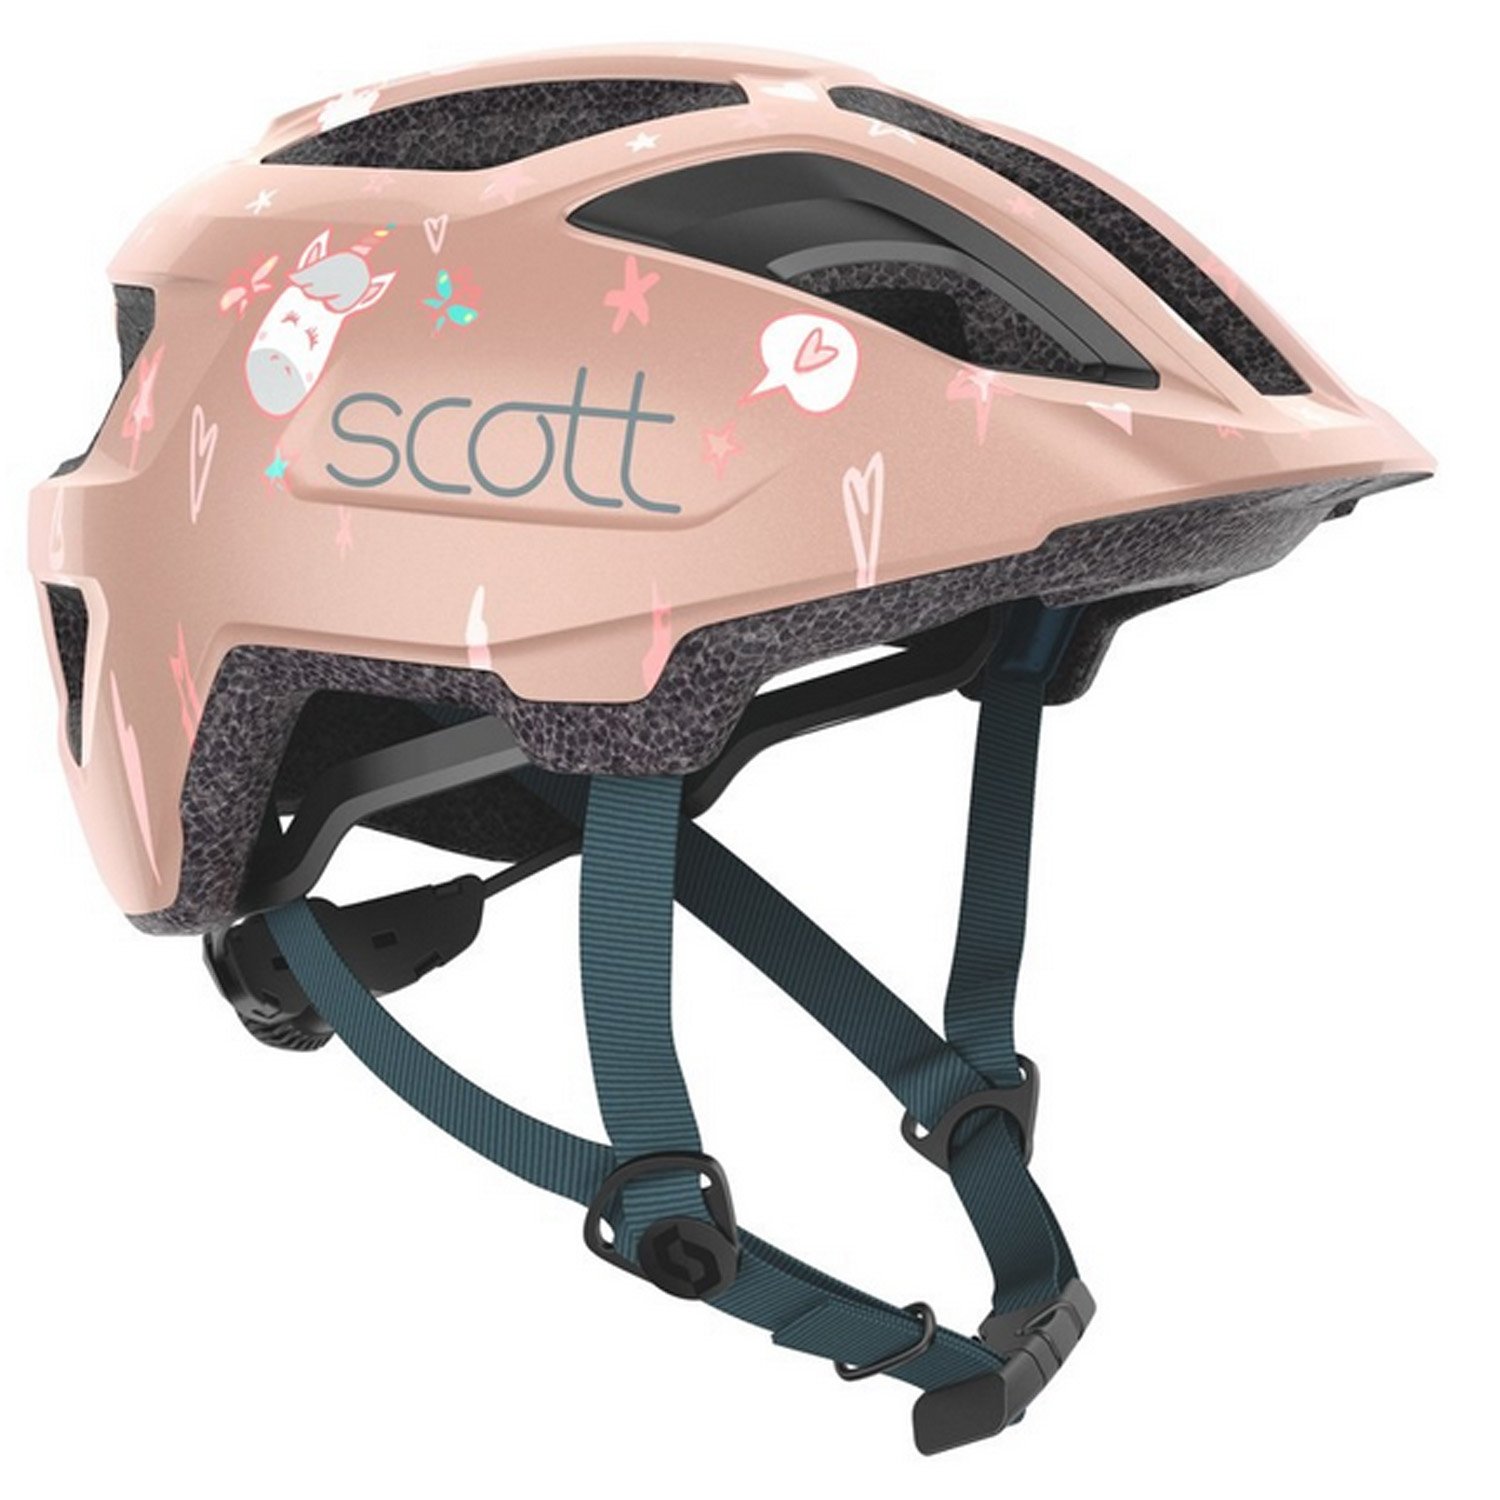 Велошлем SCOTT Kid Spunto (CE), crystal pink, ES275235-7174 велошлем scott jr spunto plus ce fire orange es288597 6522